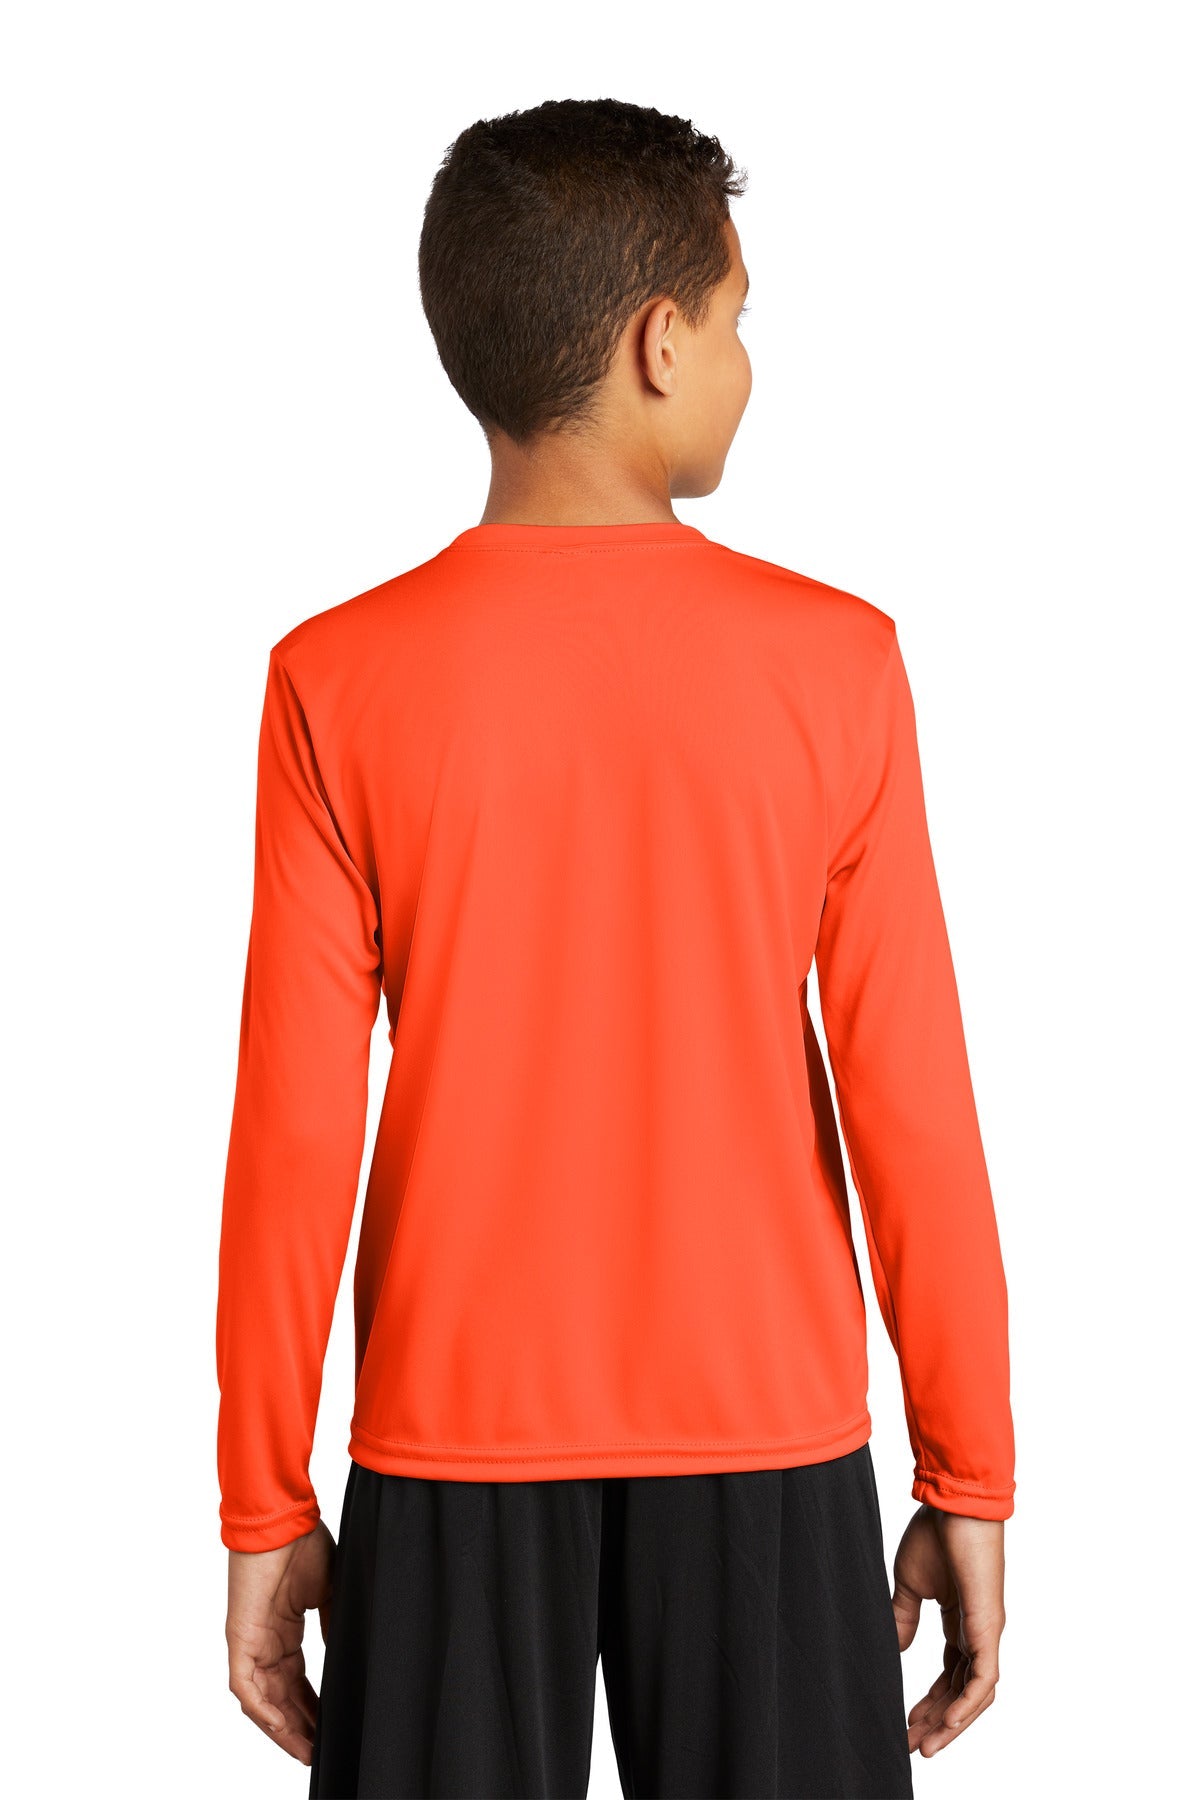 Sport-Tek® Youth Long Sleeve PosiCharge® Competitor™ Tee. YST350LS [Neon Orange] - DFW Impression